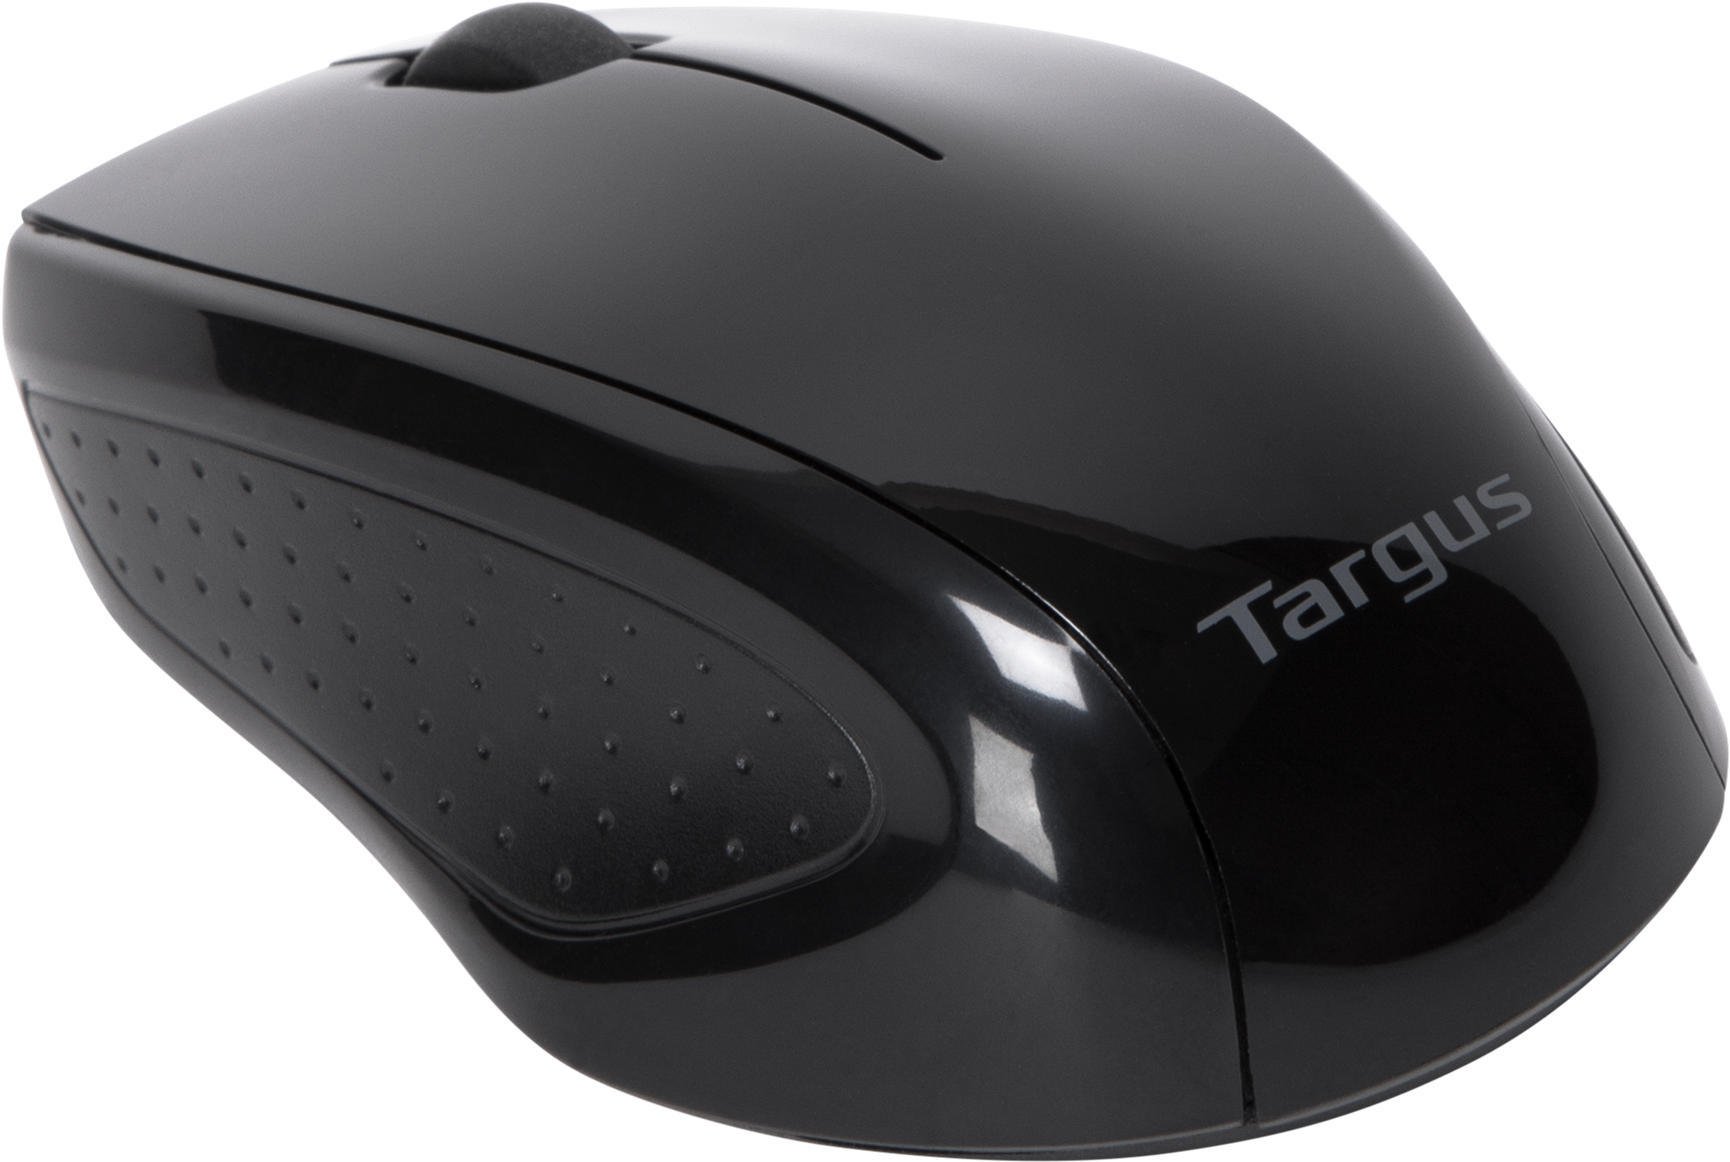 W571 Wireless Optical Mouse - Targus W571 - Wireless Optical Mouse - Pc/mac - Black (1800x1800)